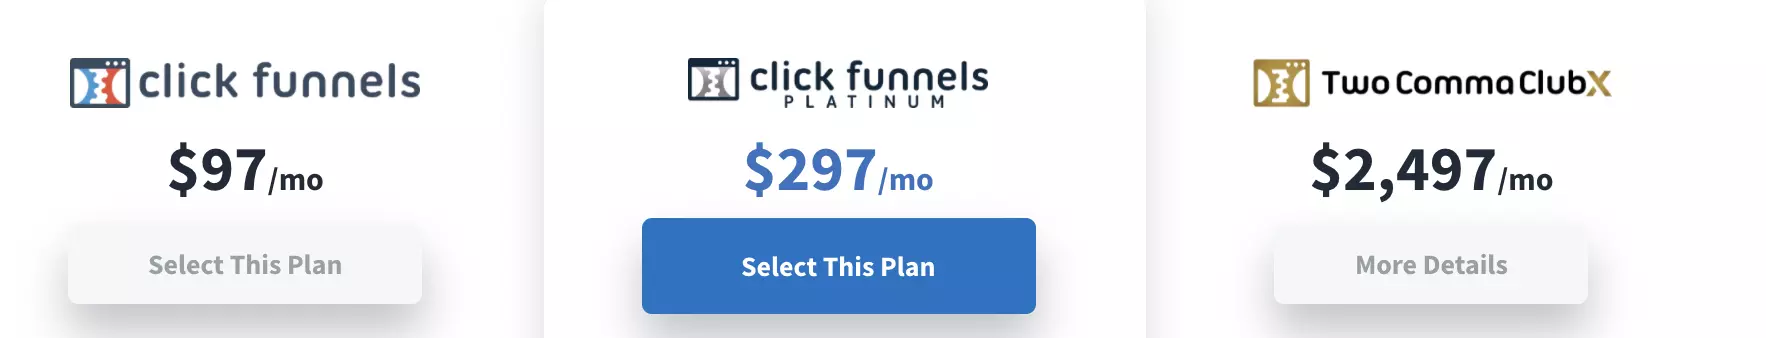 Click funnels tarifs